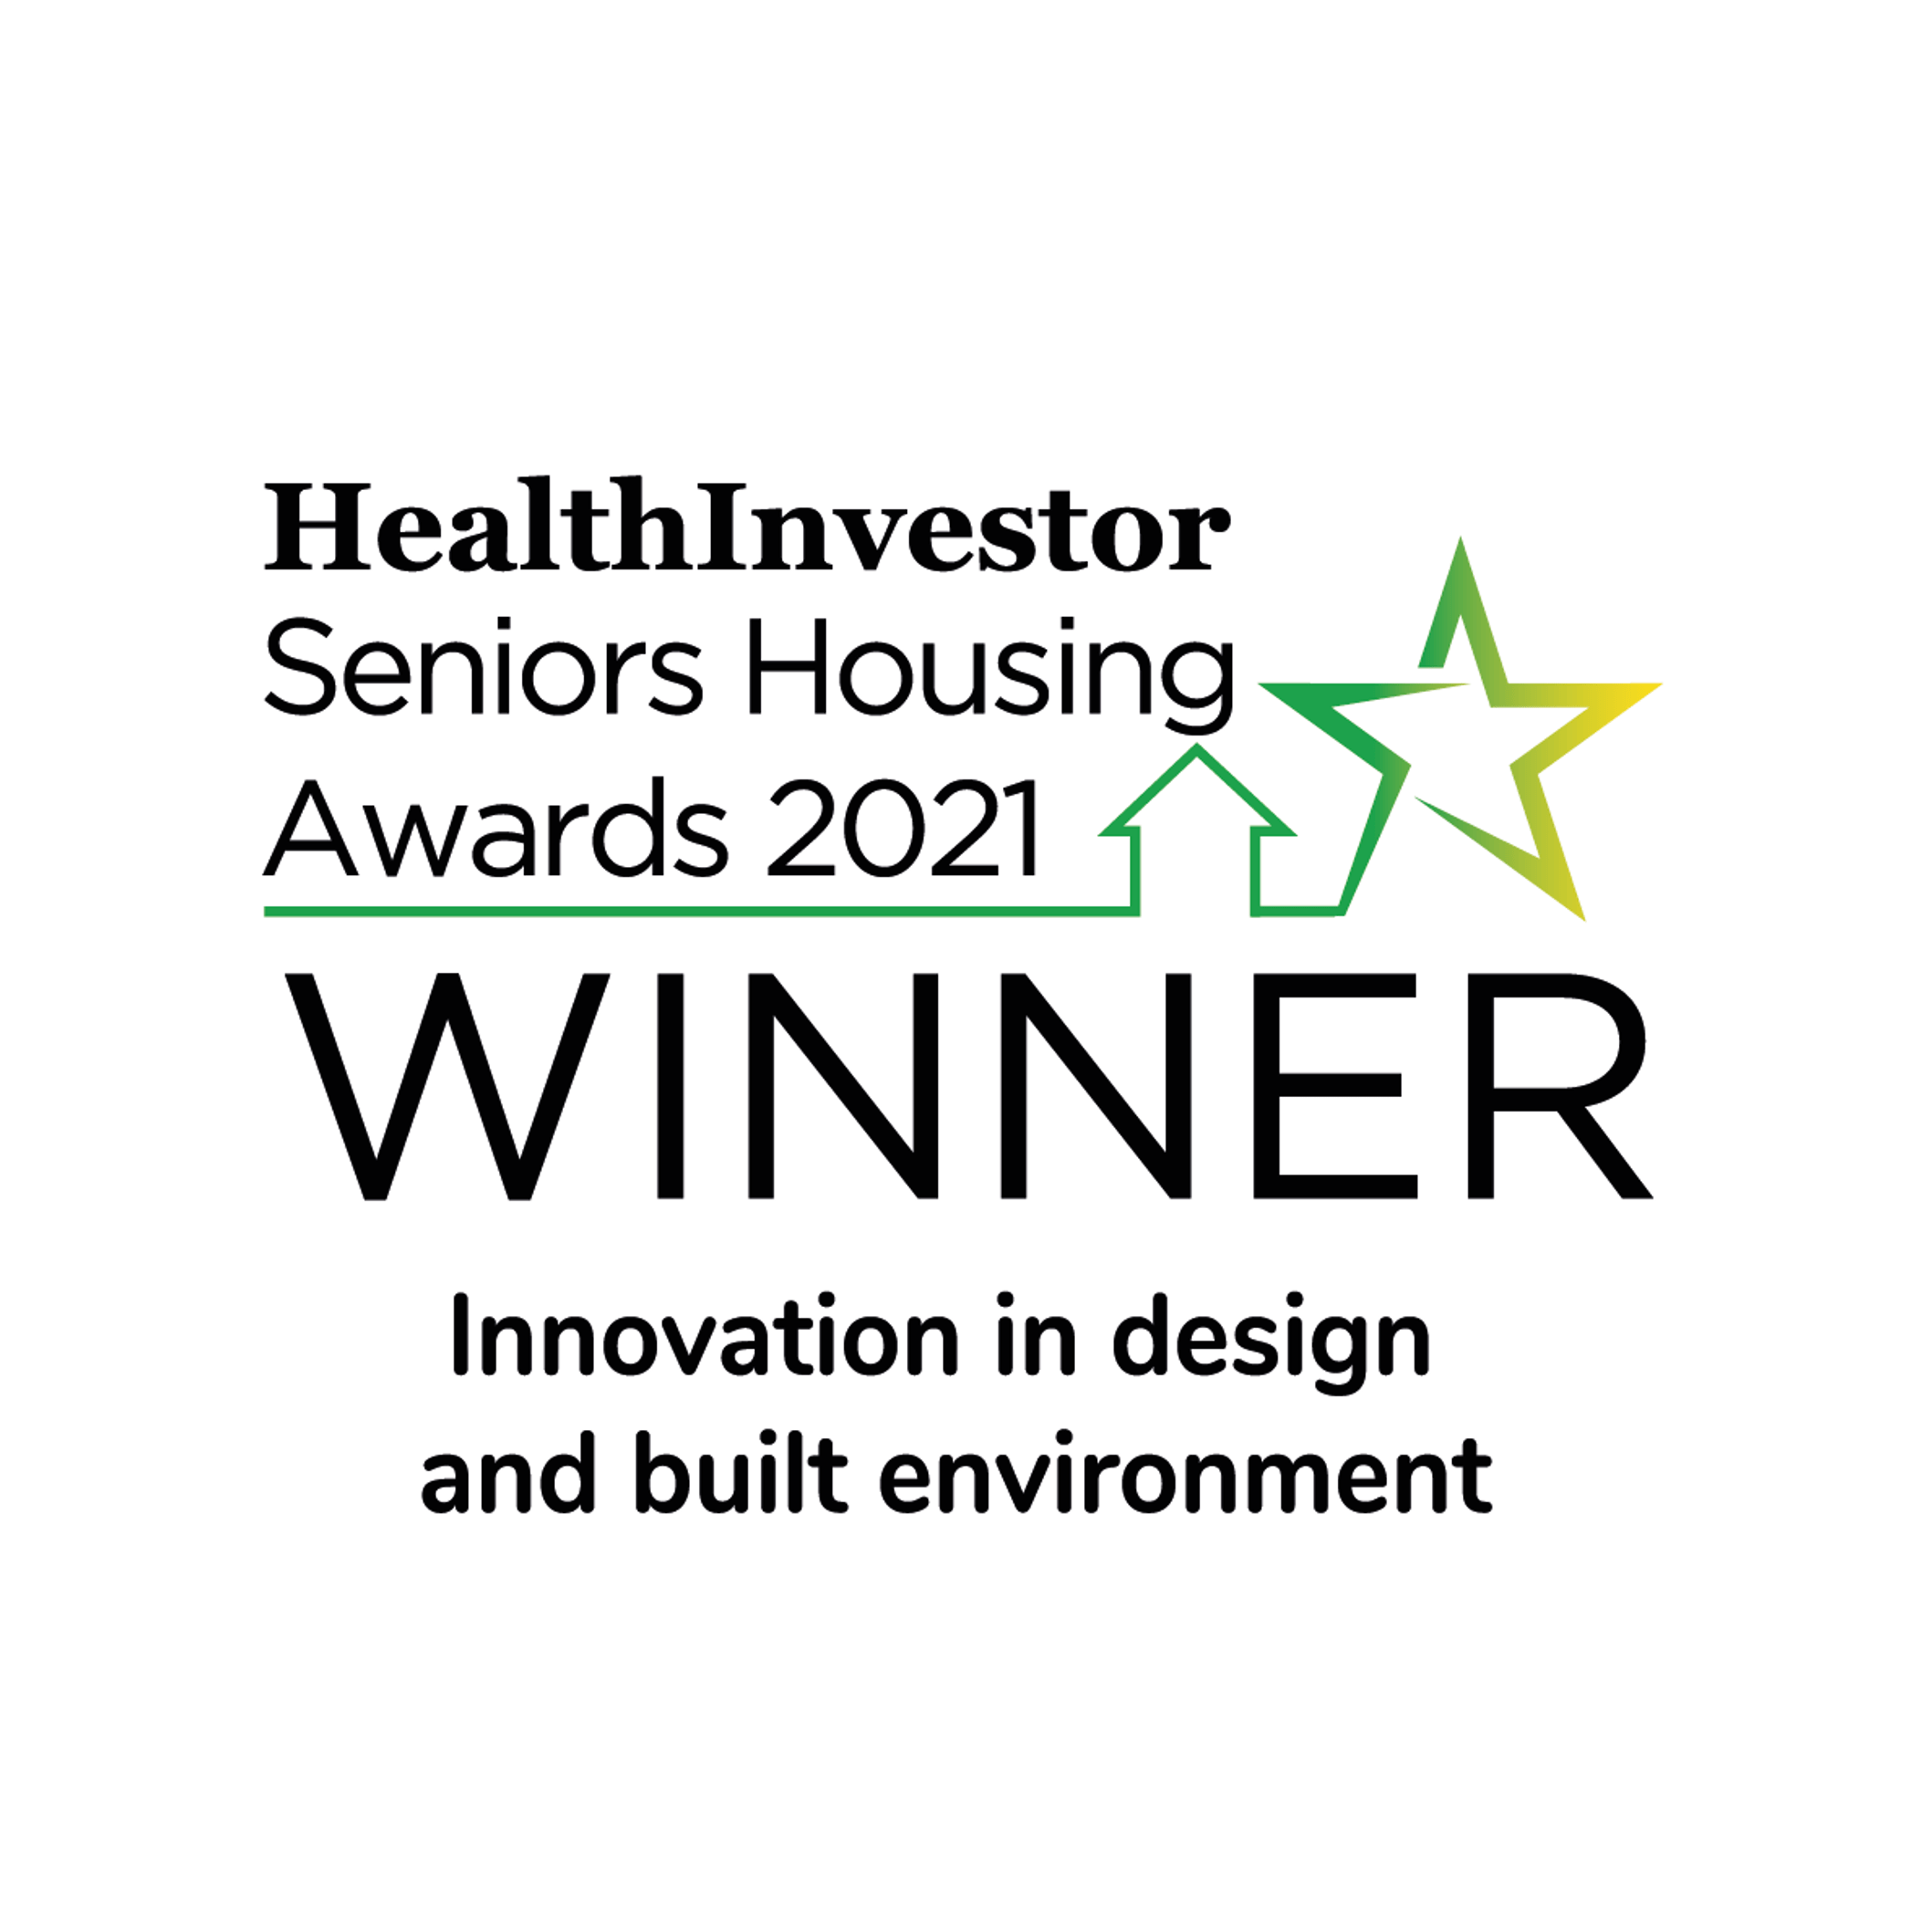 Senior Housing Awards 2021 Innovation Image.png